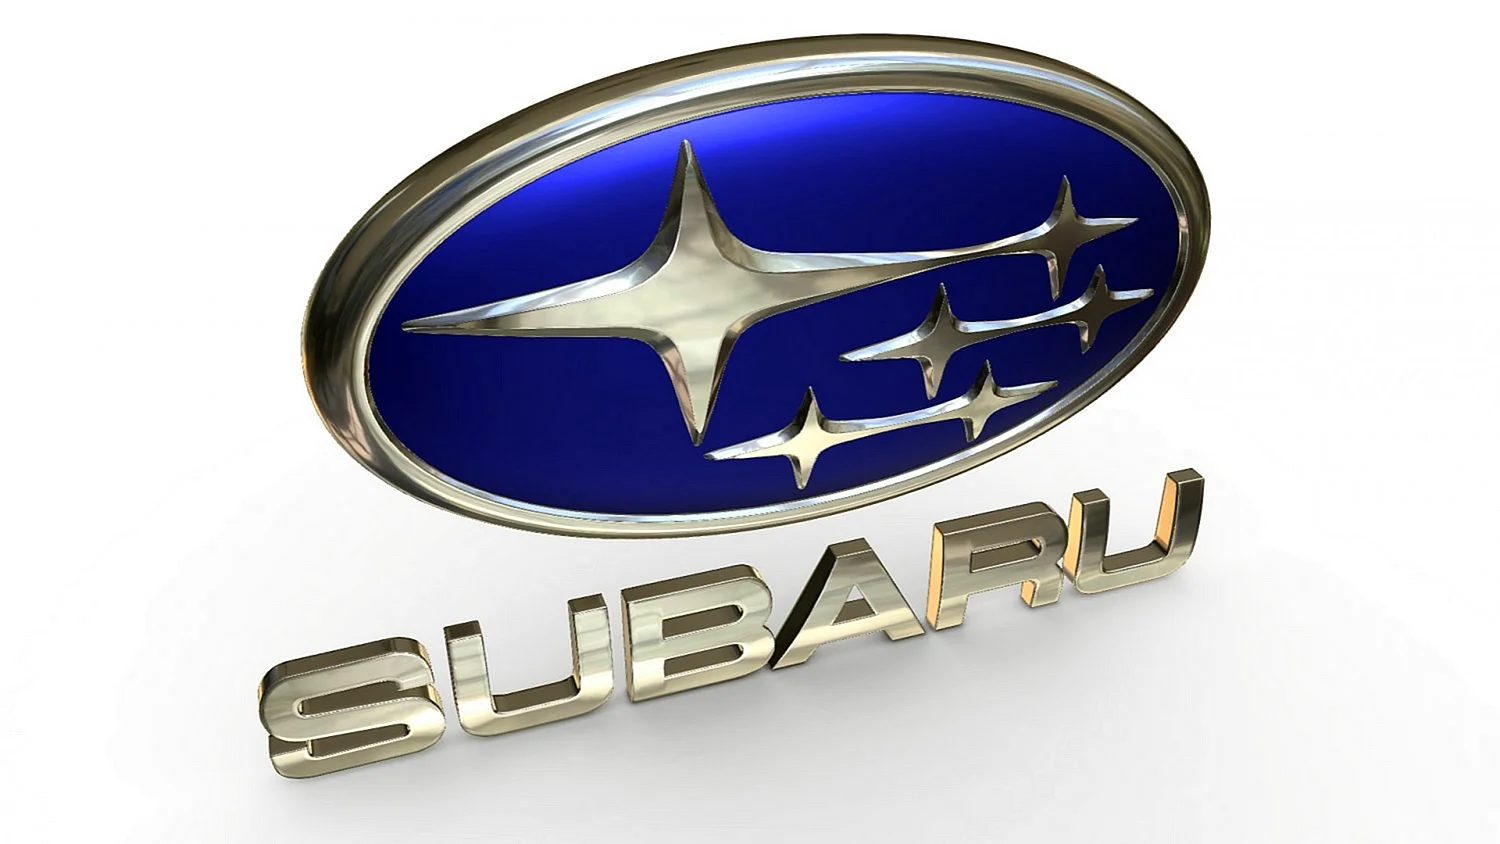 Subaru логотип